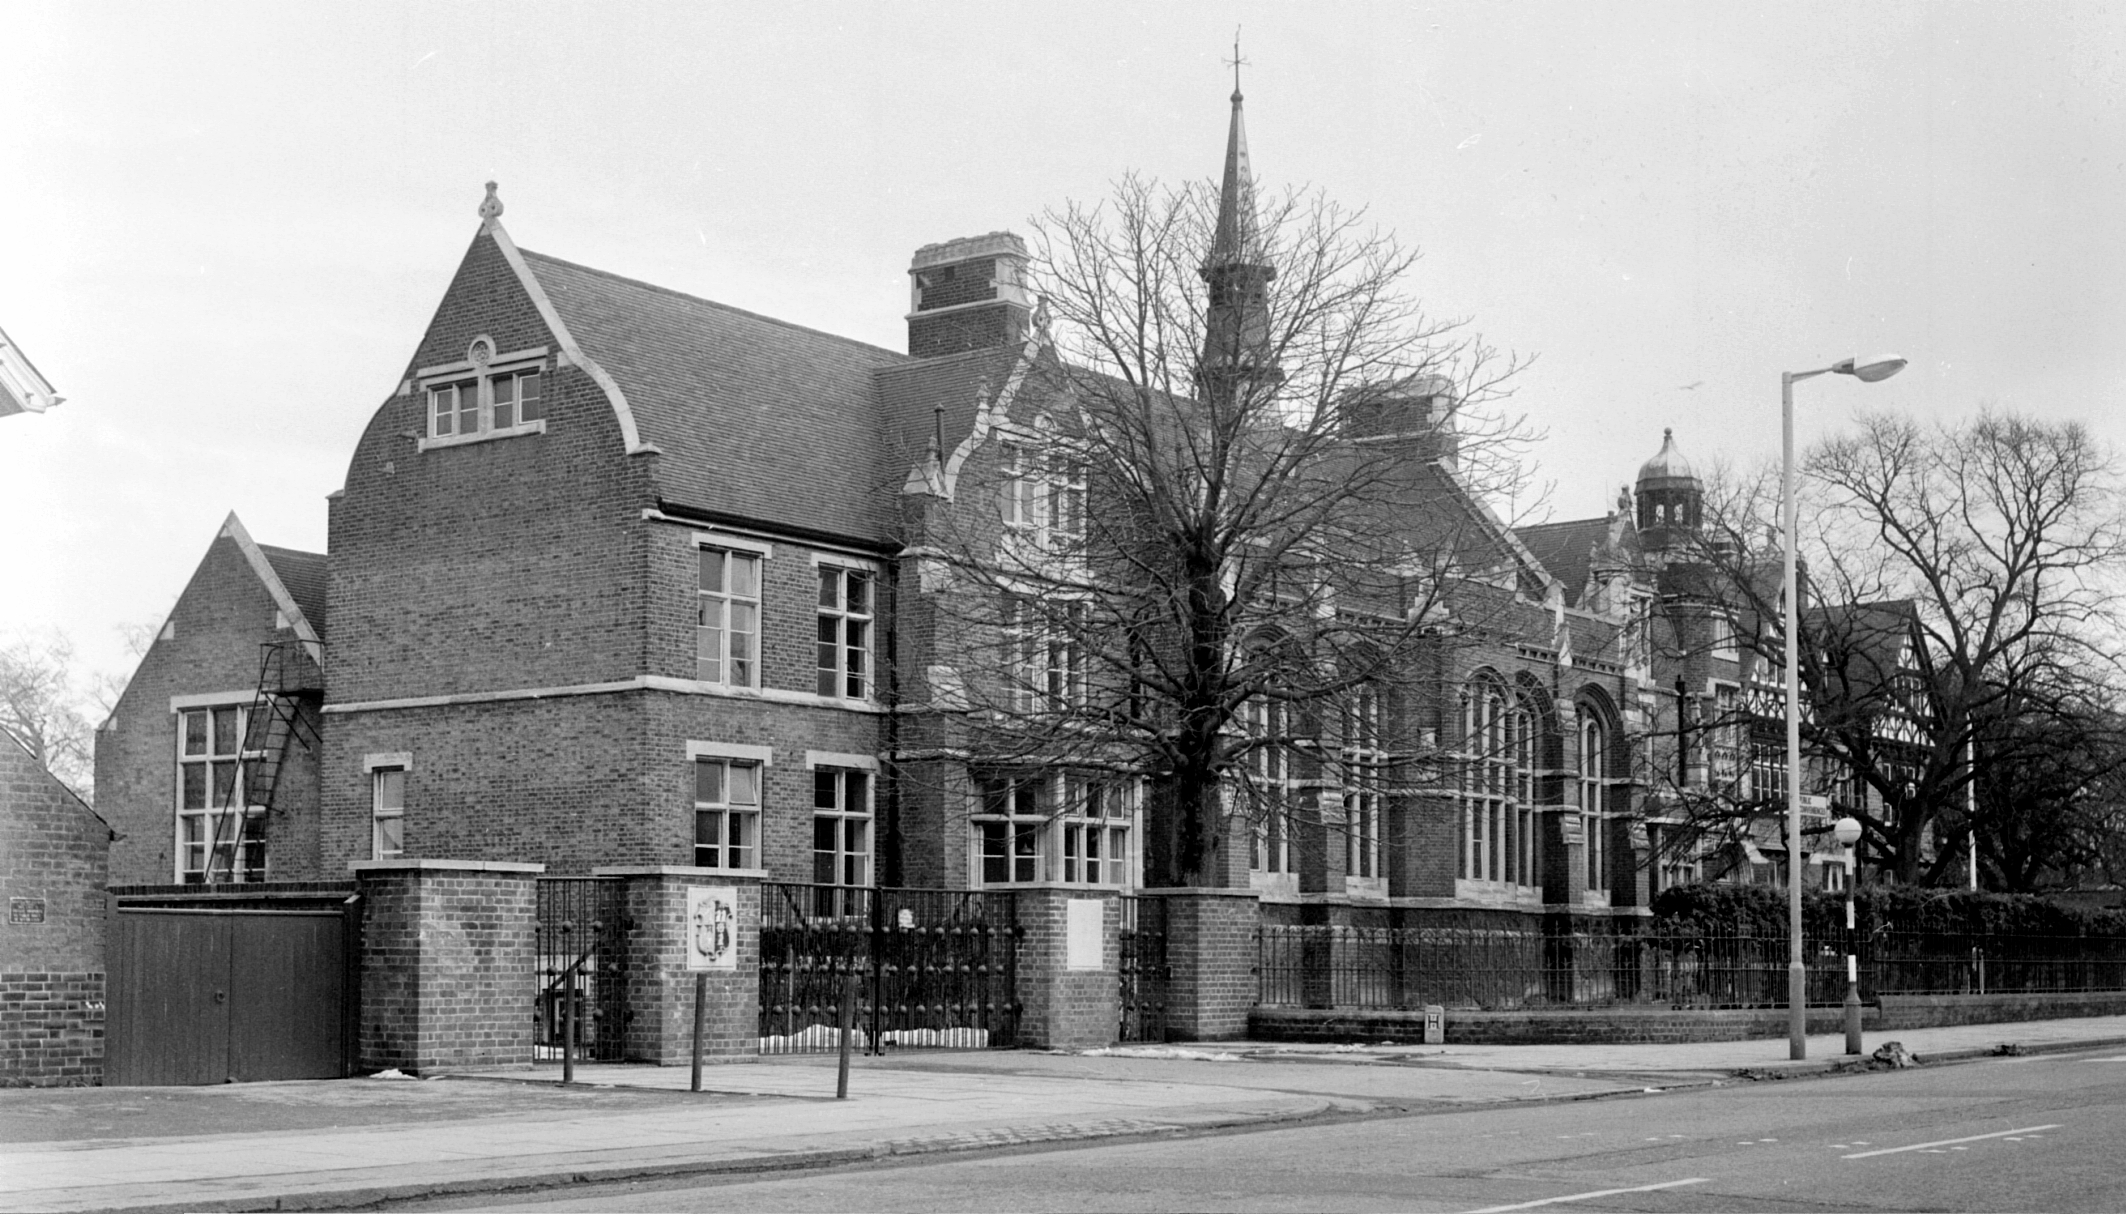 Dunstable (Ashton) Grammar School. Photo of the front main building